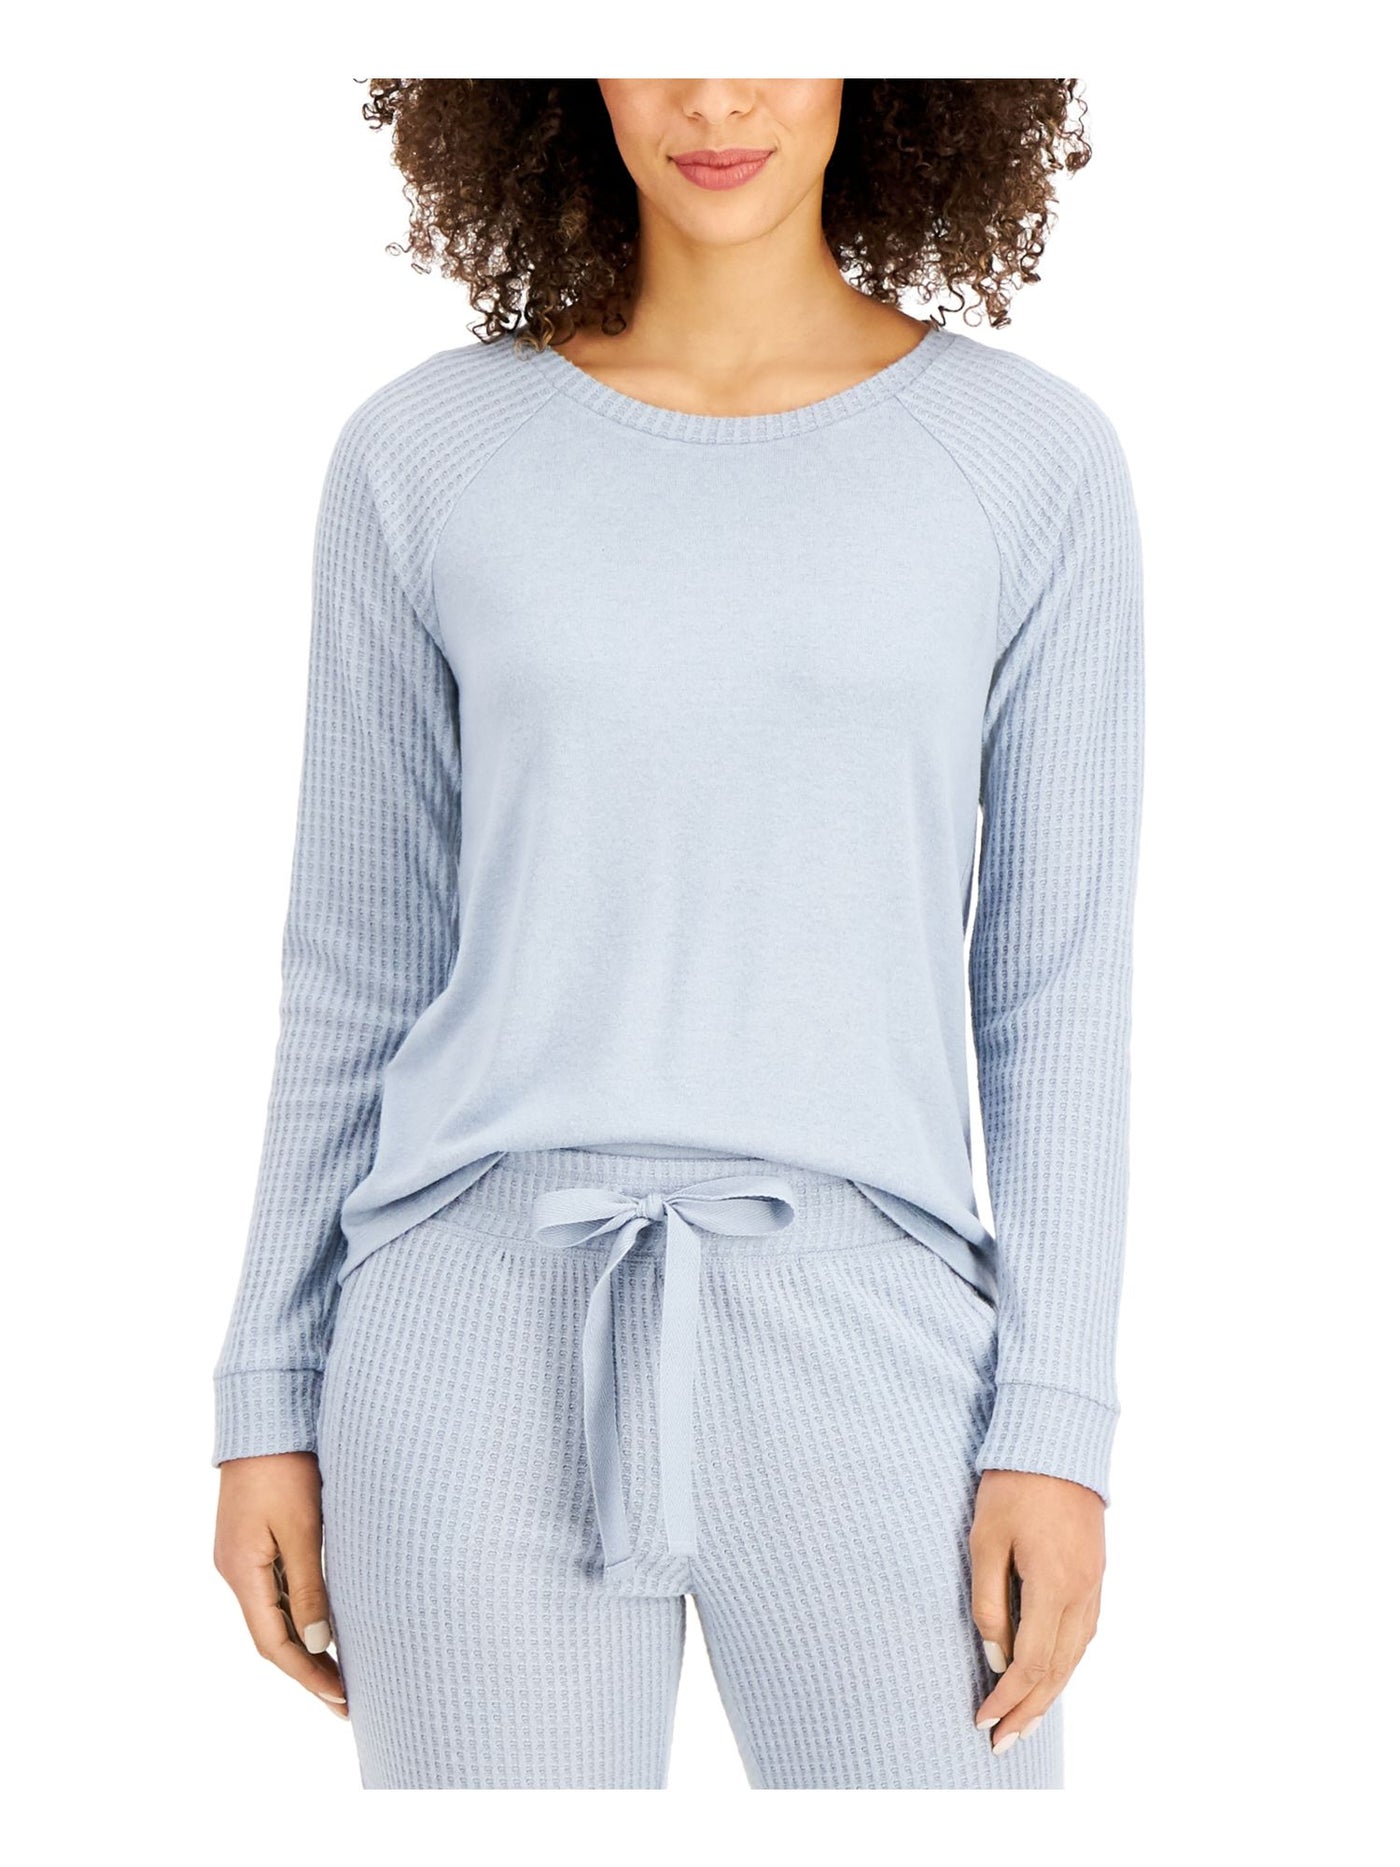 ALFANI Intimates Light Blue Pullover Sleep Shirt Pajama Top XXL